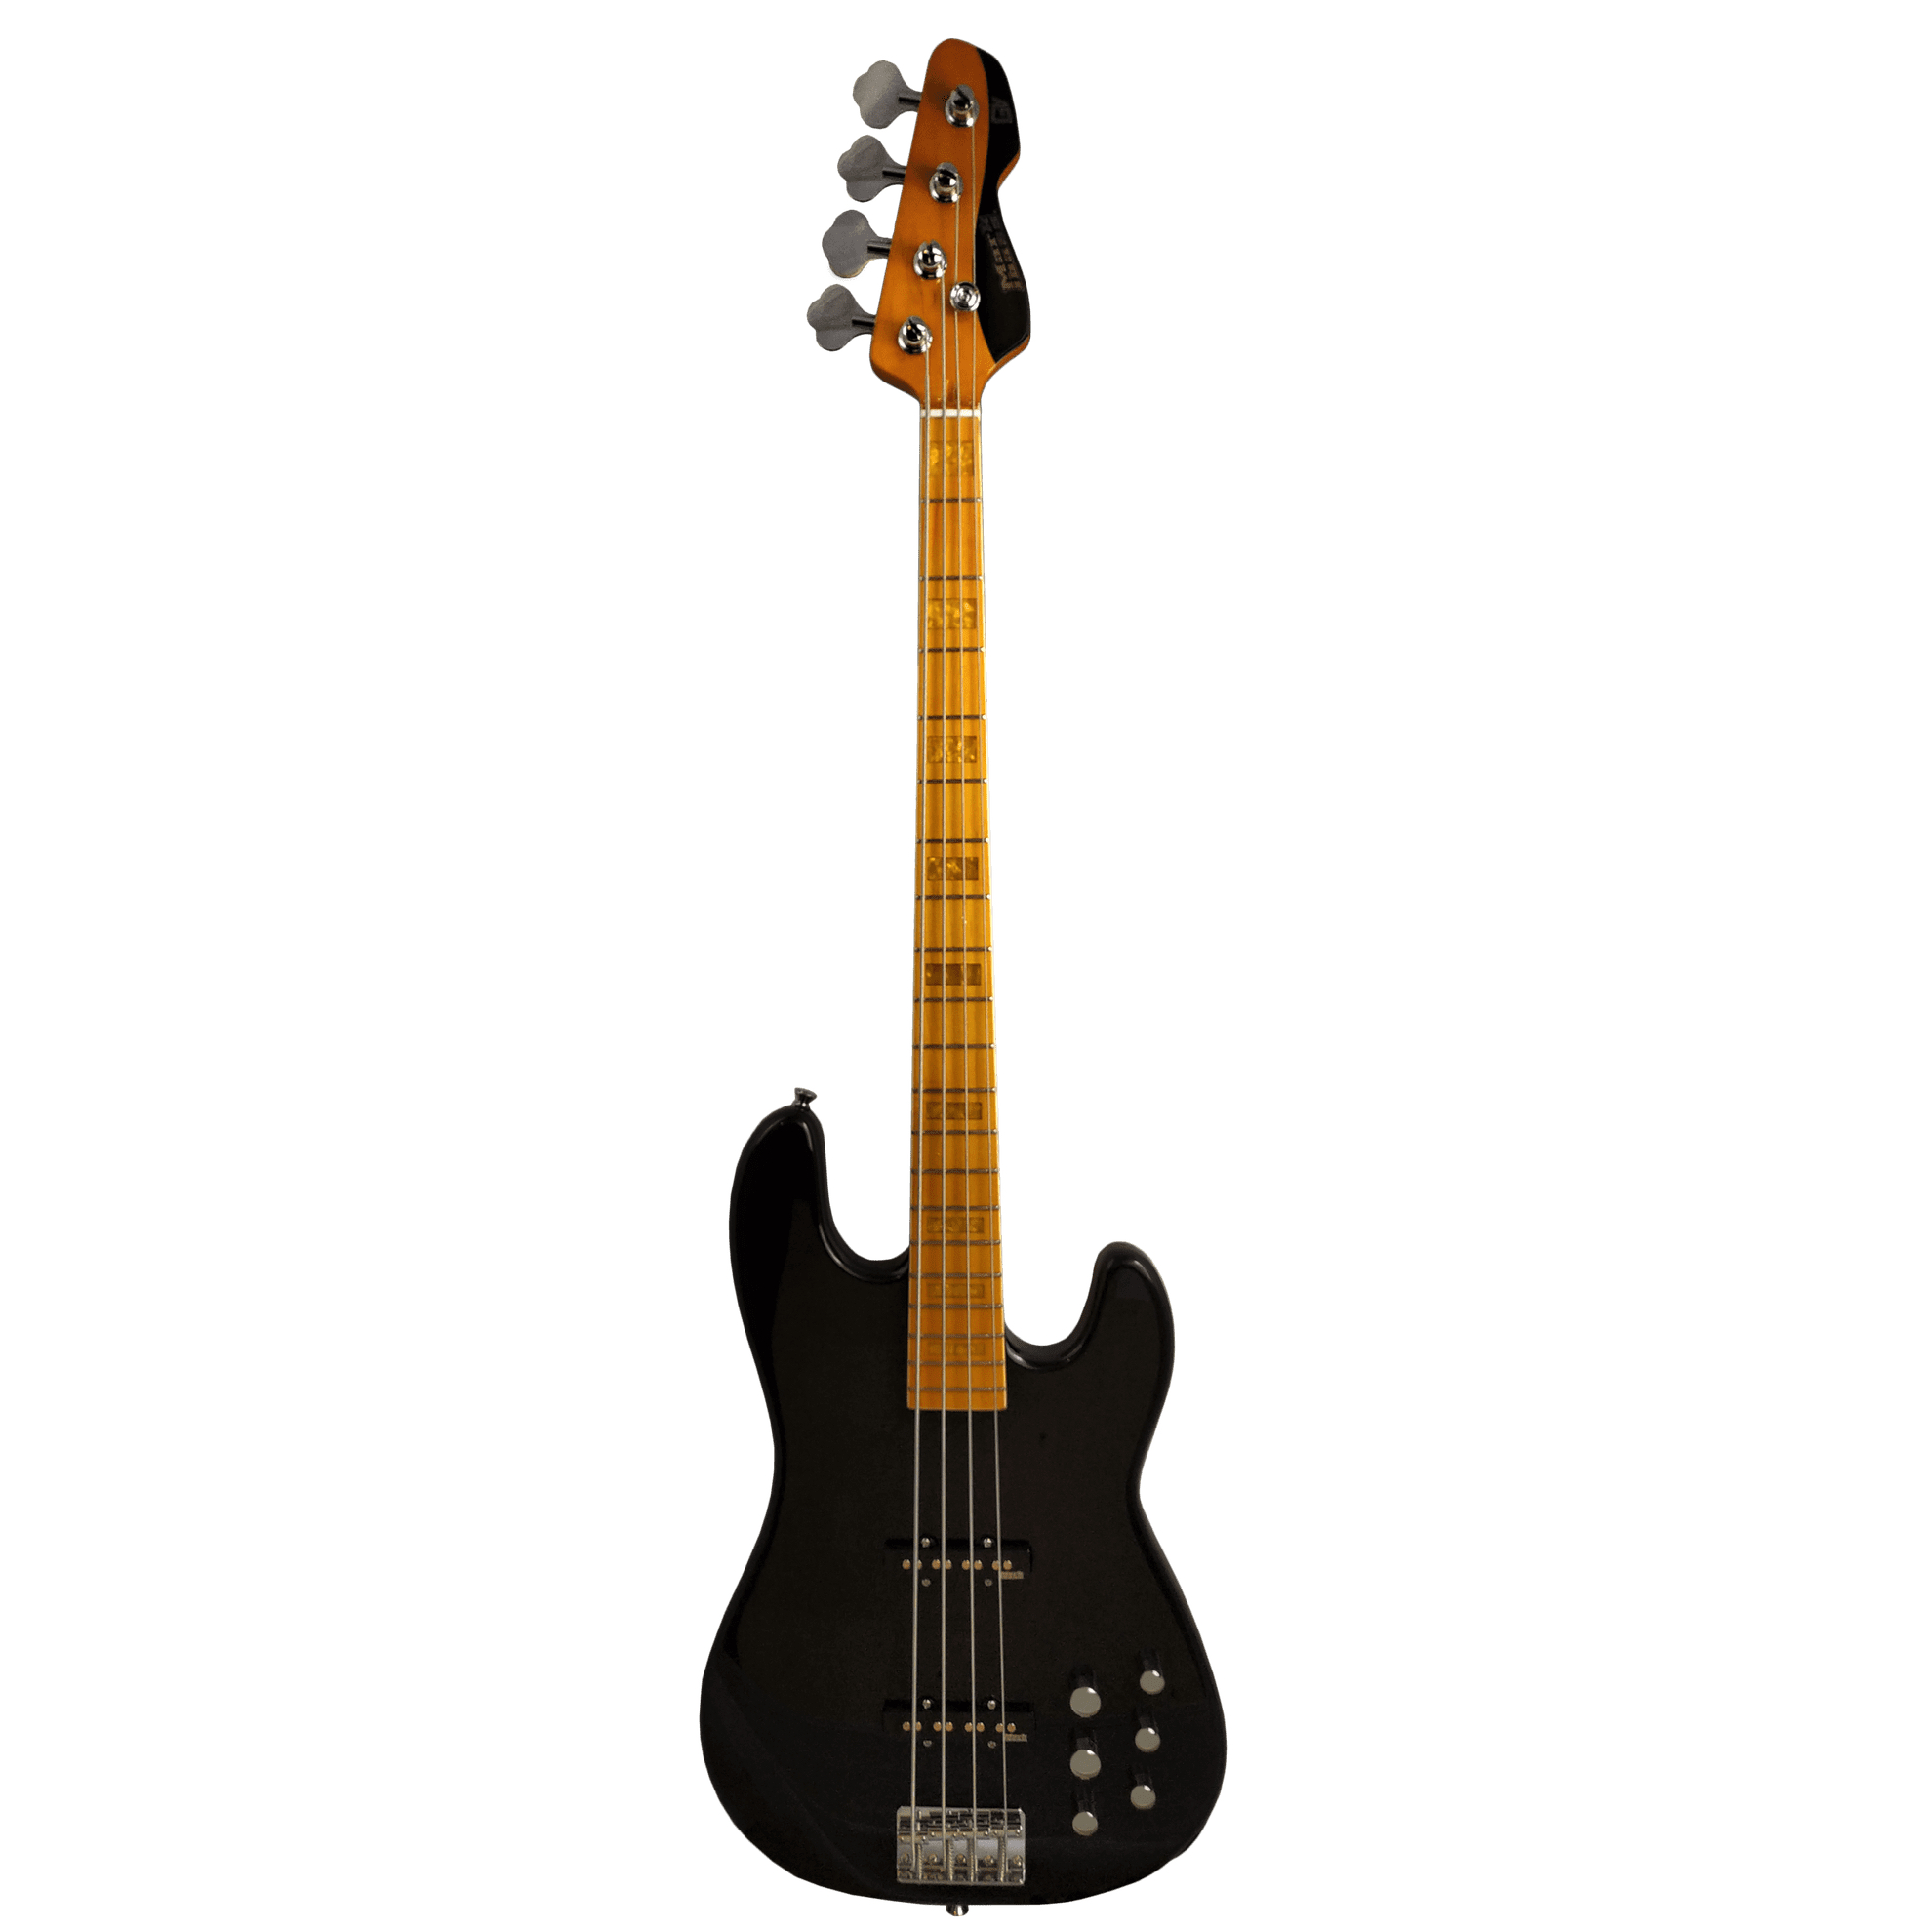 Бас-гитары Mark Bass MB GV 4 Gloxy Val Black CR MP процессоры эффектов и педали для гитары mooer p1 black